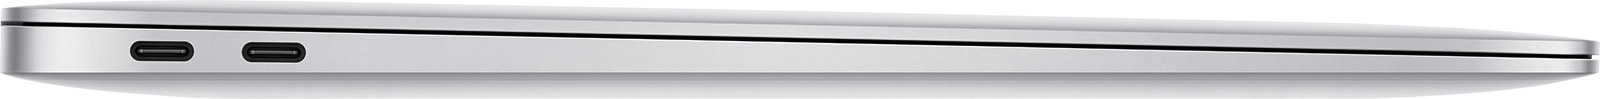 REFURBISHED-Apple-MacBook-Air-13-1-2-GHz-Core-i7-04.jpg